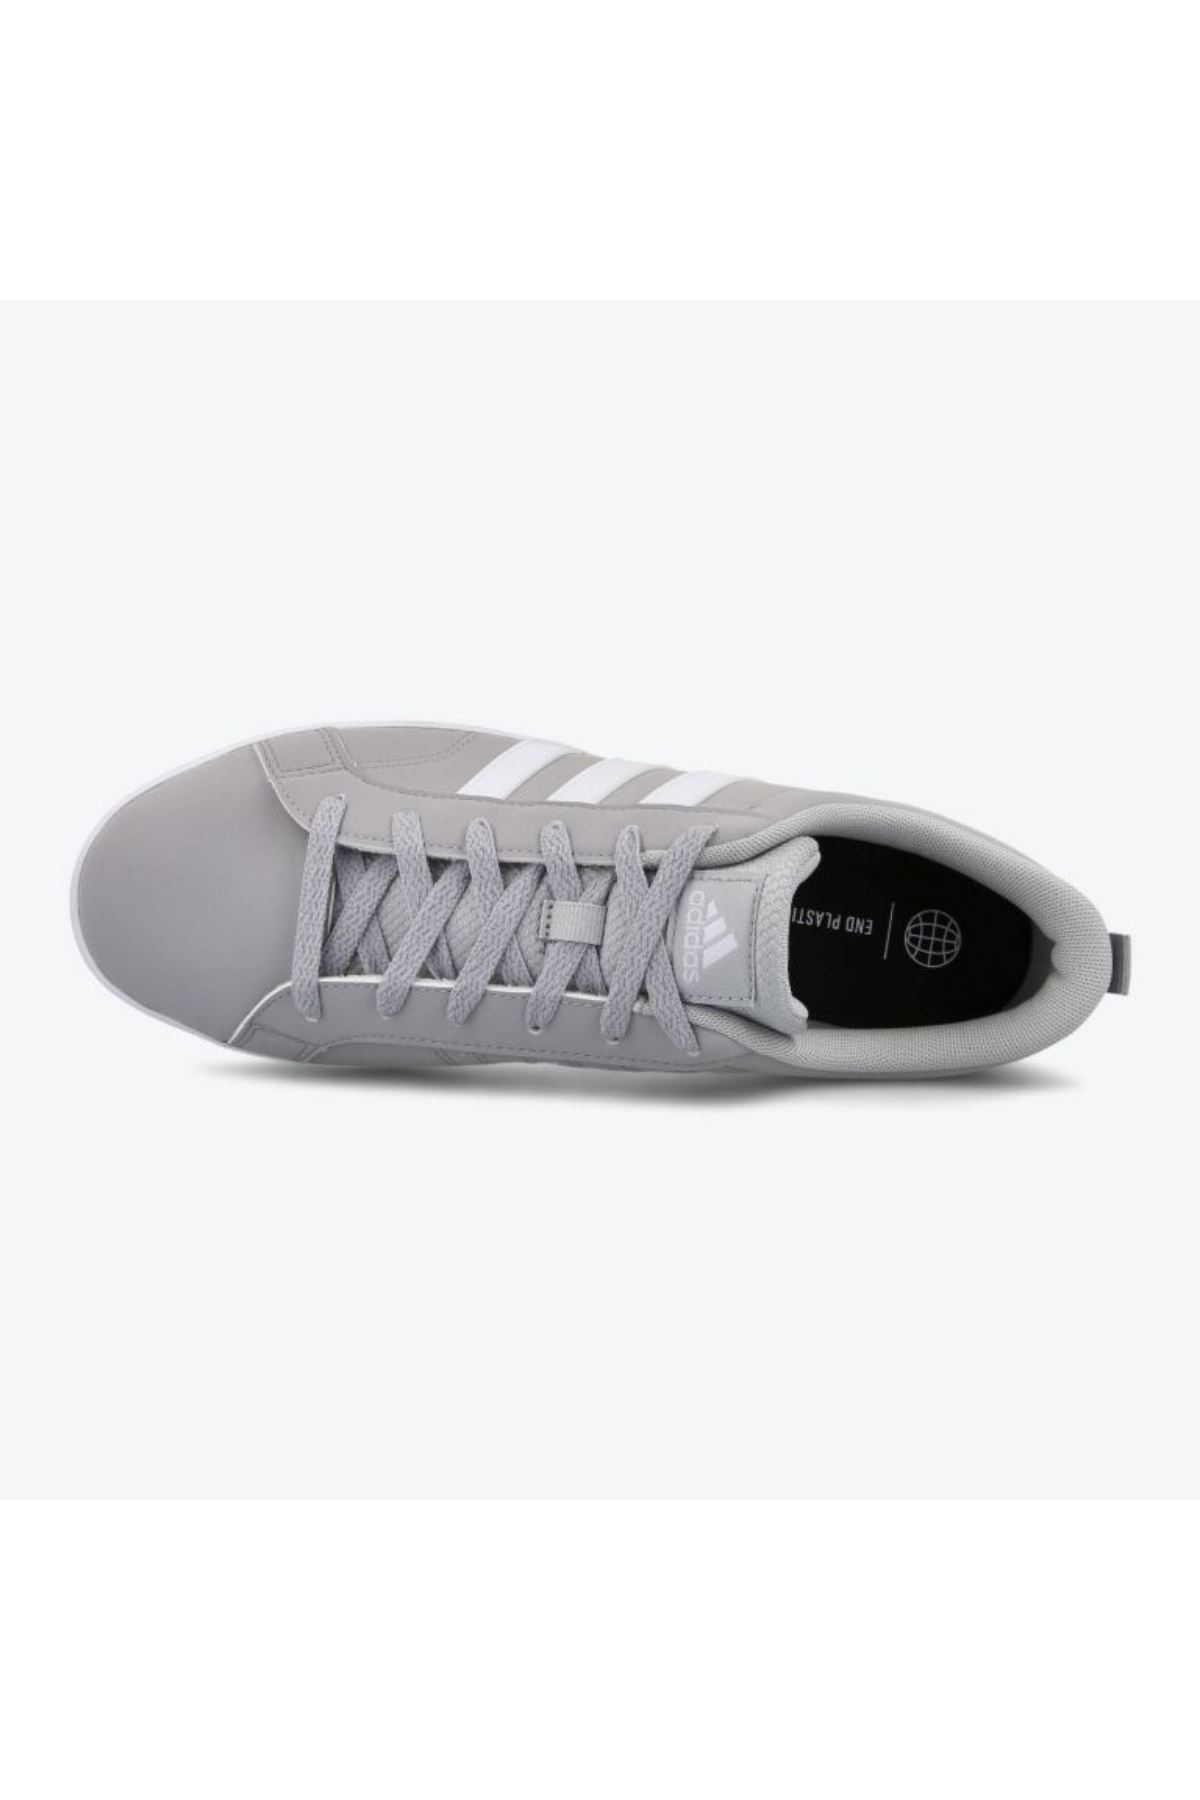 adidas Vs Pace 2.0 Erkek Gri Spor Ayakkabı (HP6006)